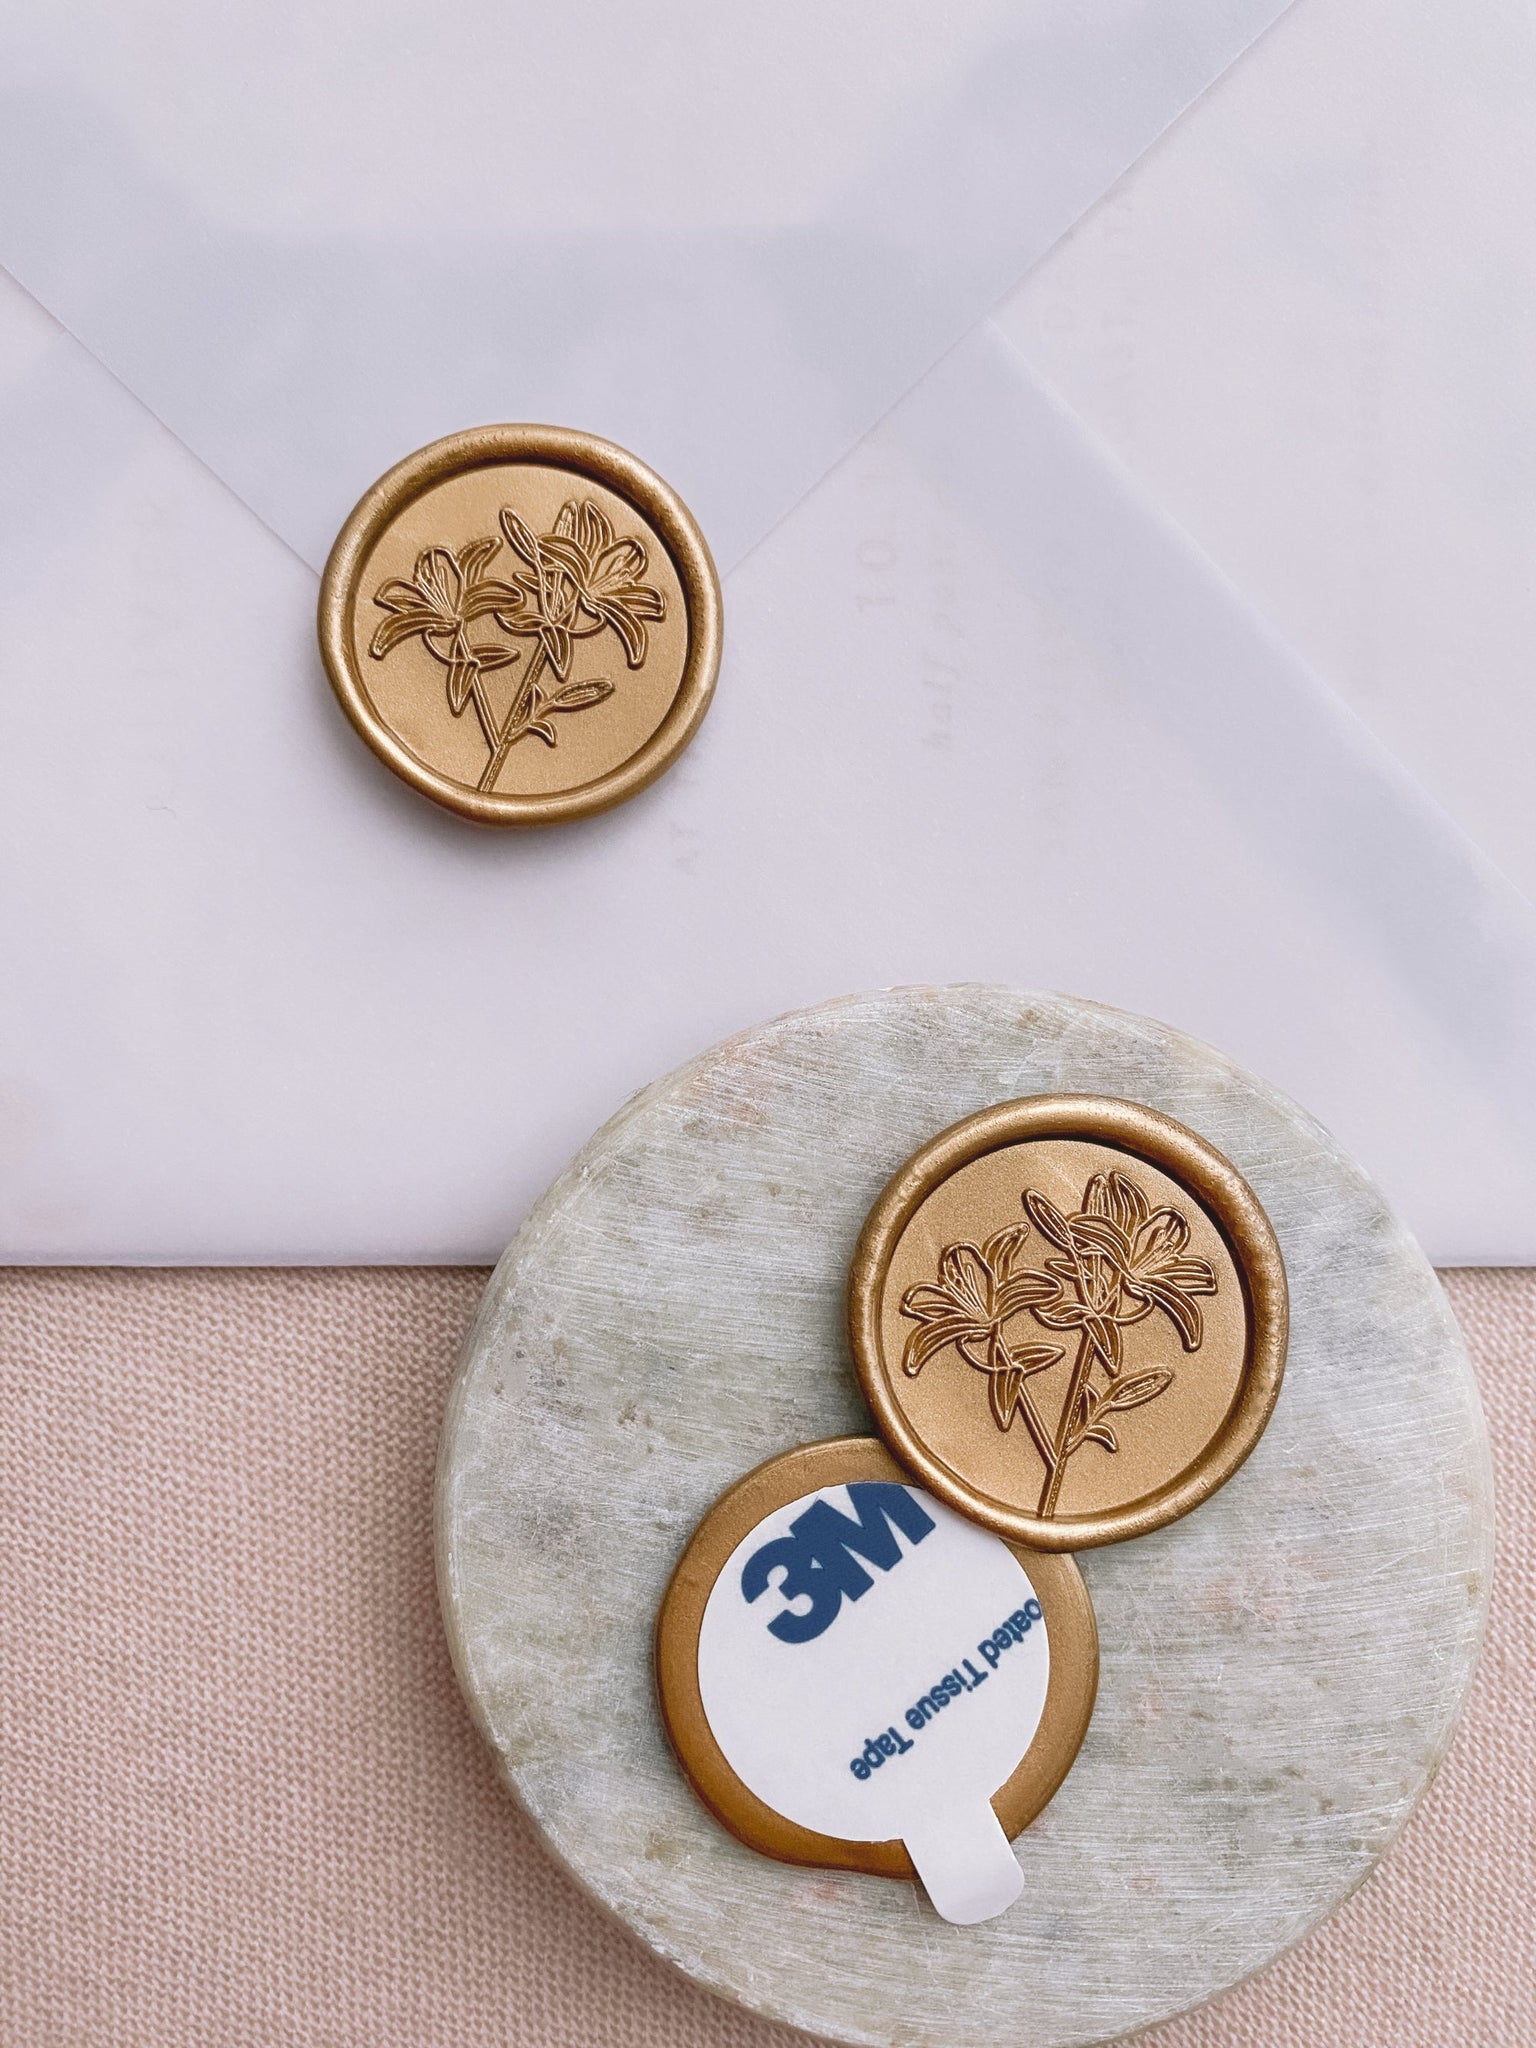 Lily round wax seals in gold with 3m sticker